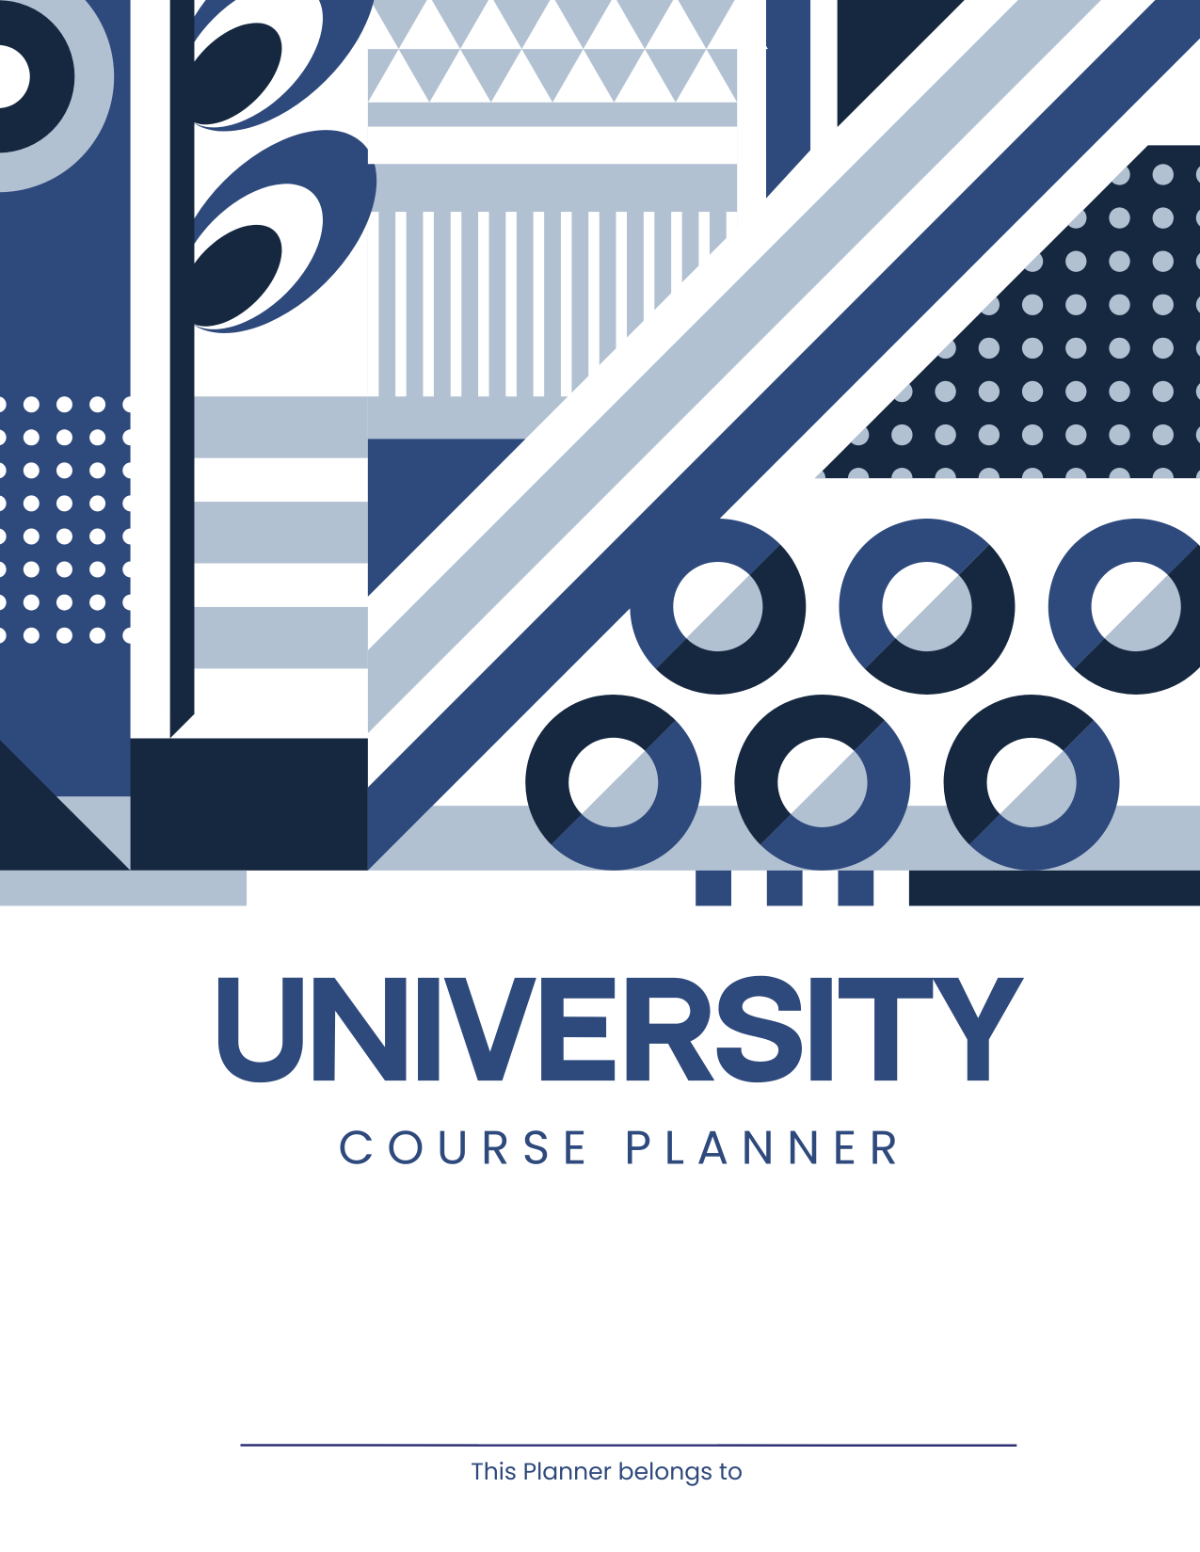 University Planner